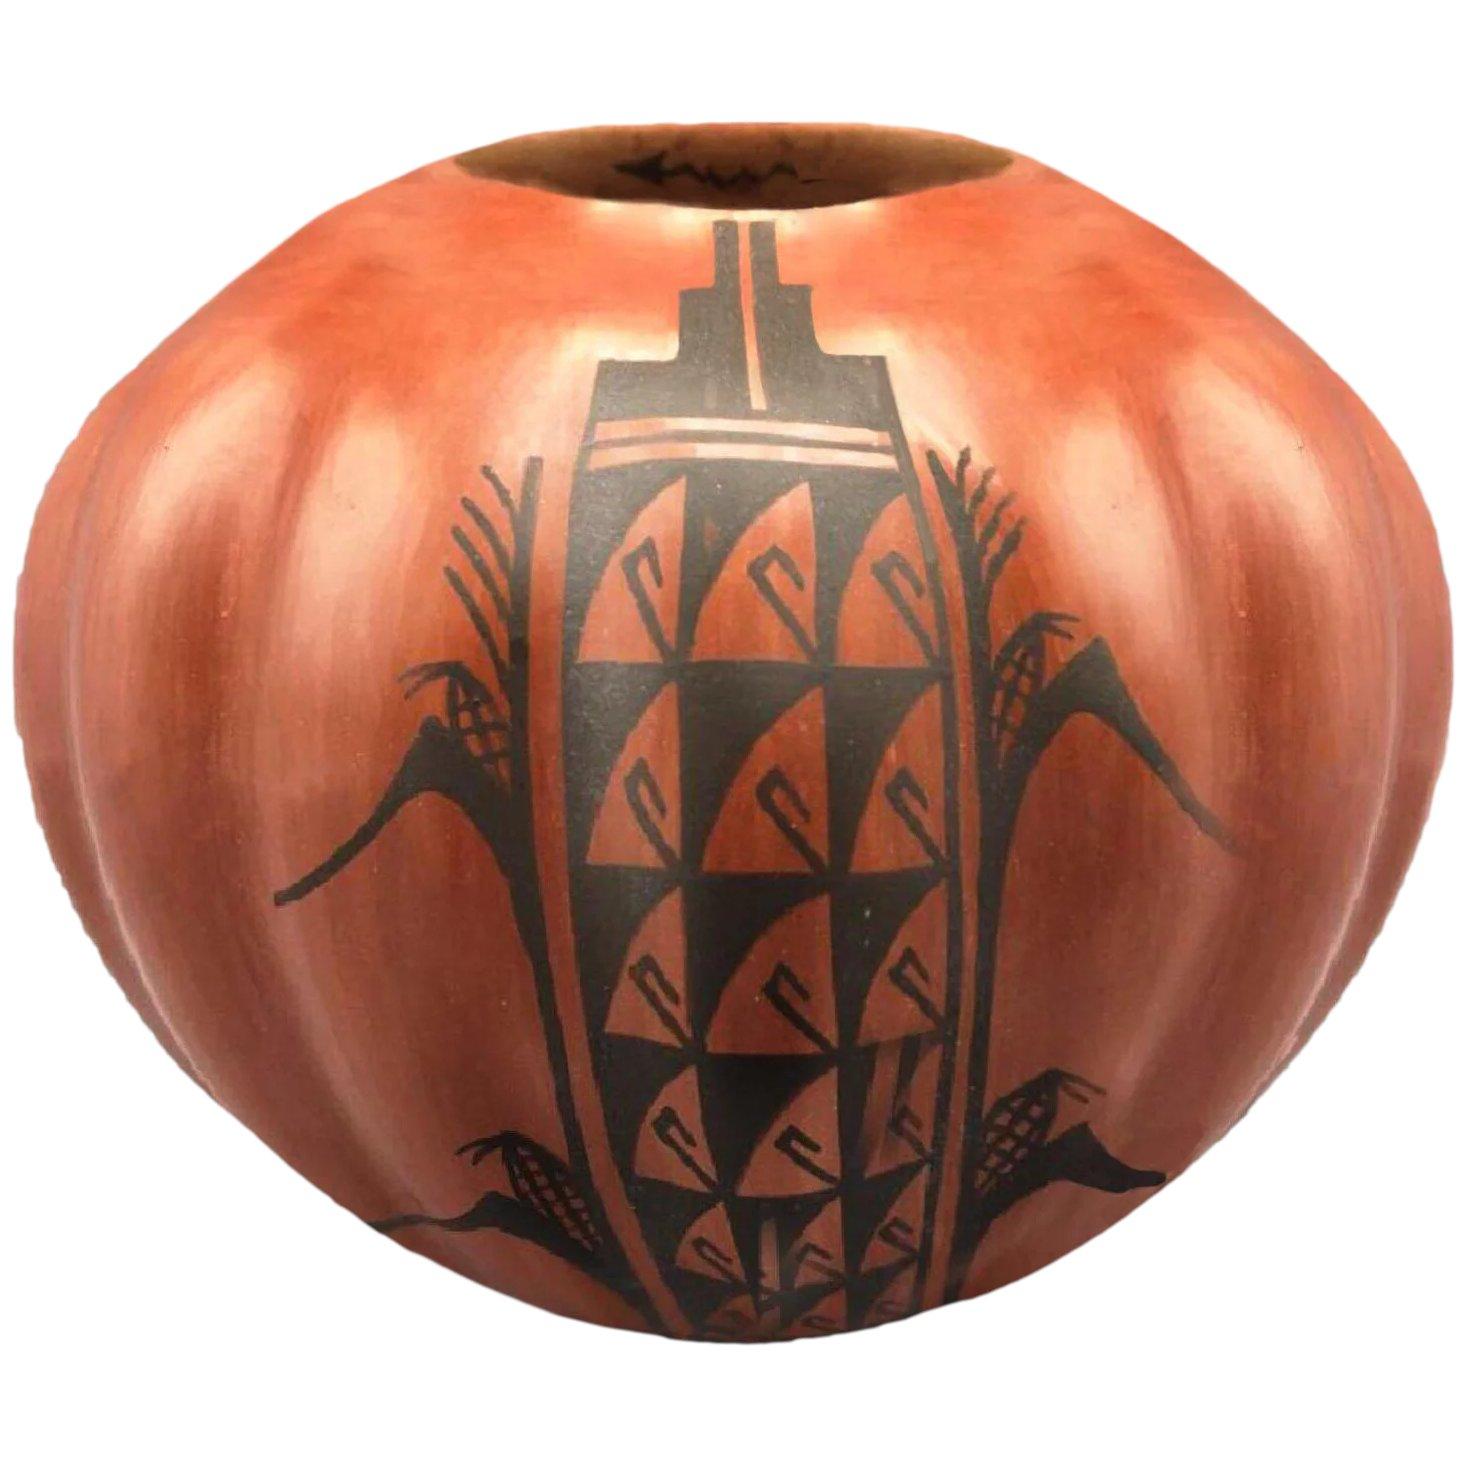 Pueblo Native American Southwestern Puebla Pottery Bowl by Juanita Fragua Jemez